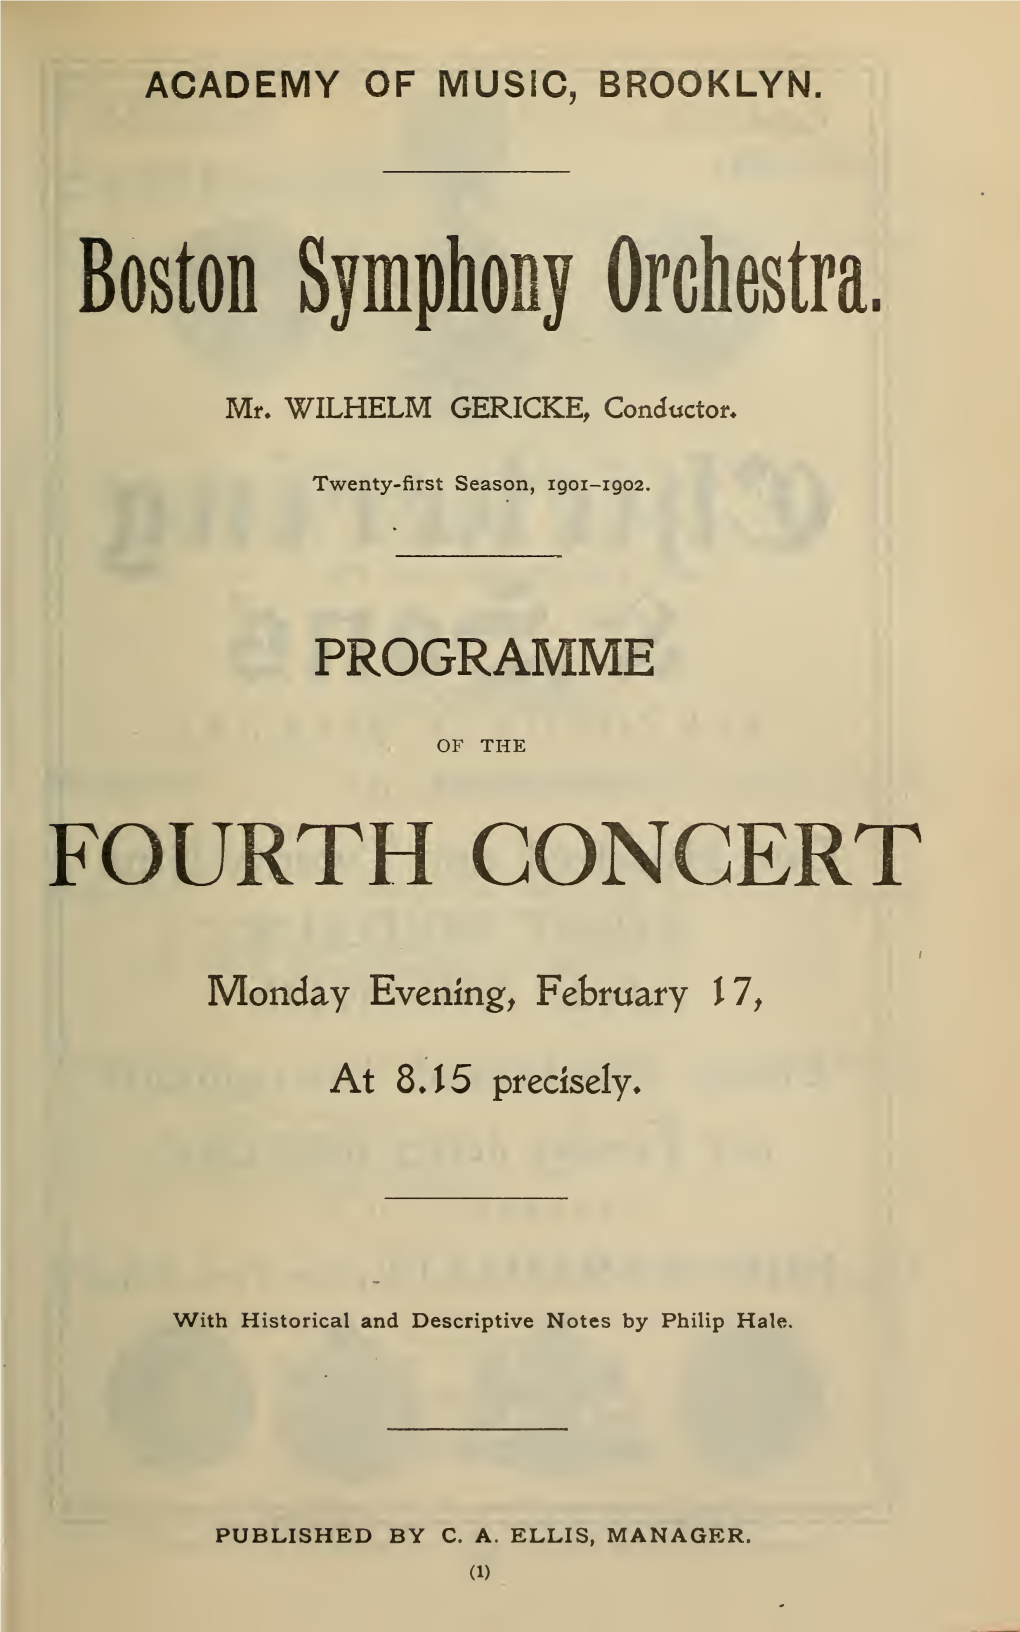 Boston Symphony Orchestra Concert Programs, Season 21,1901